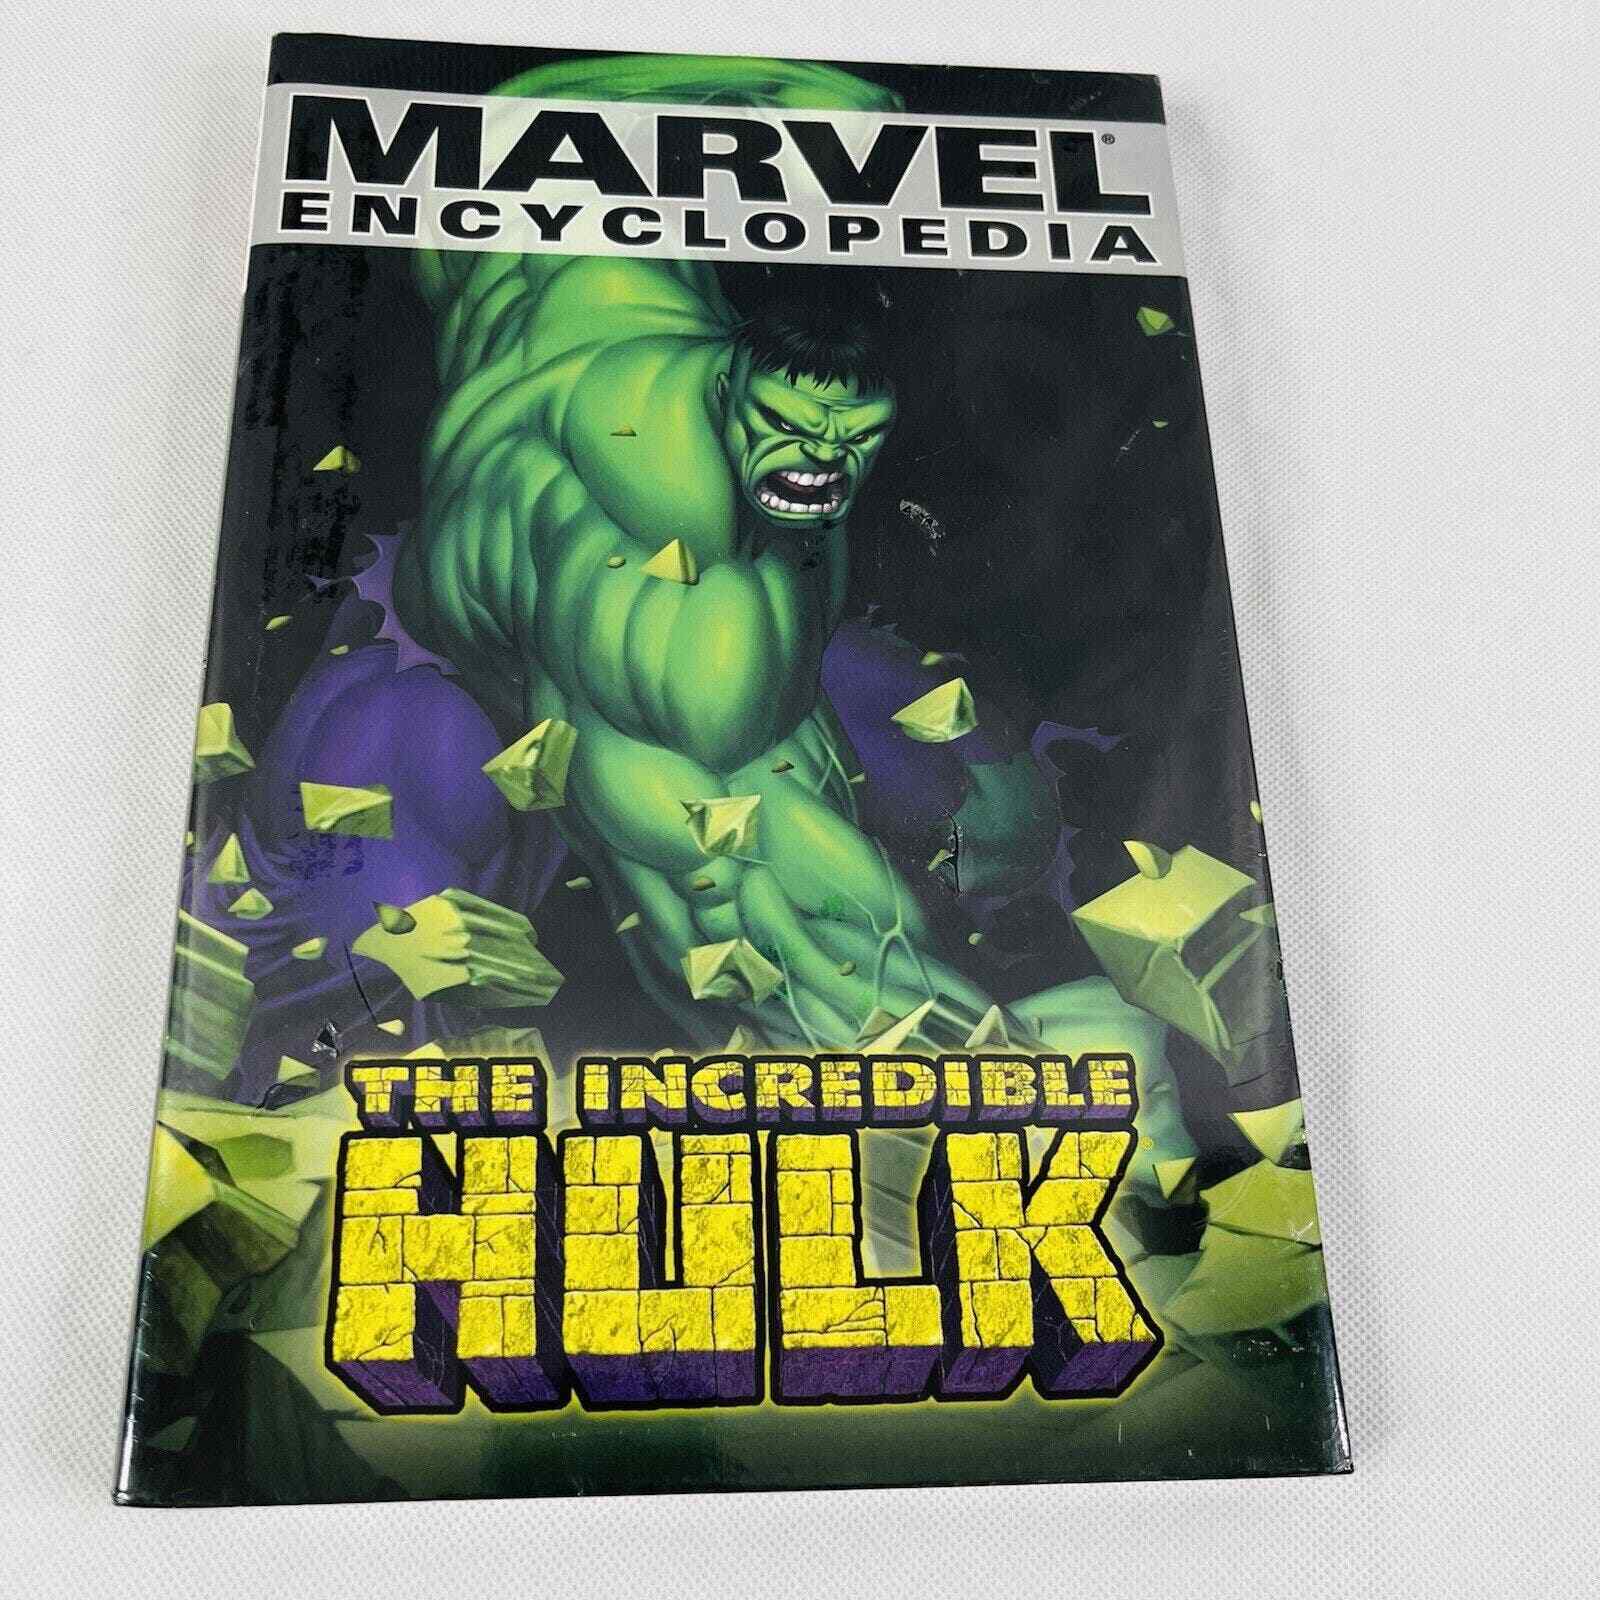 Marvel Encyclopedia The Incredible Hulk Hardcover sealed 1st Print 2003